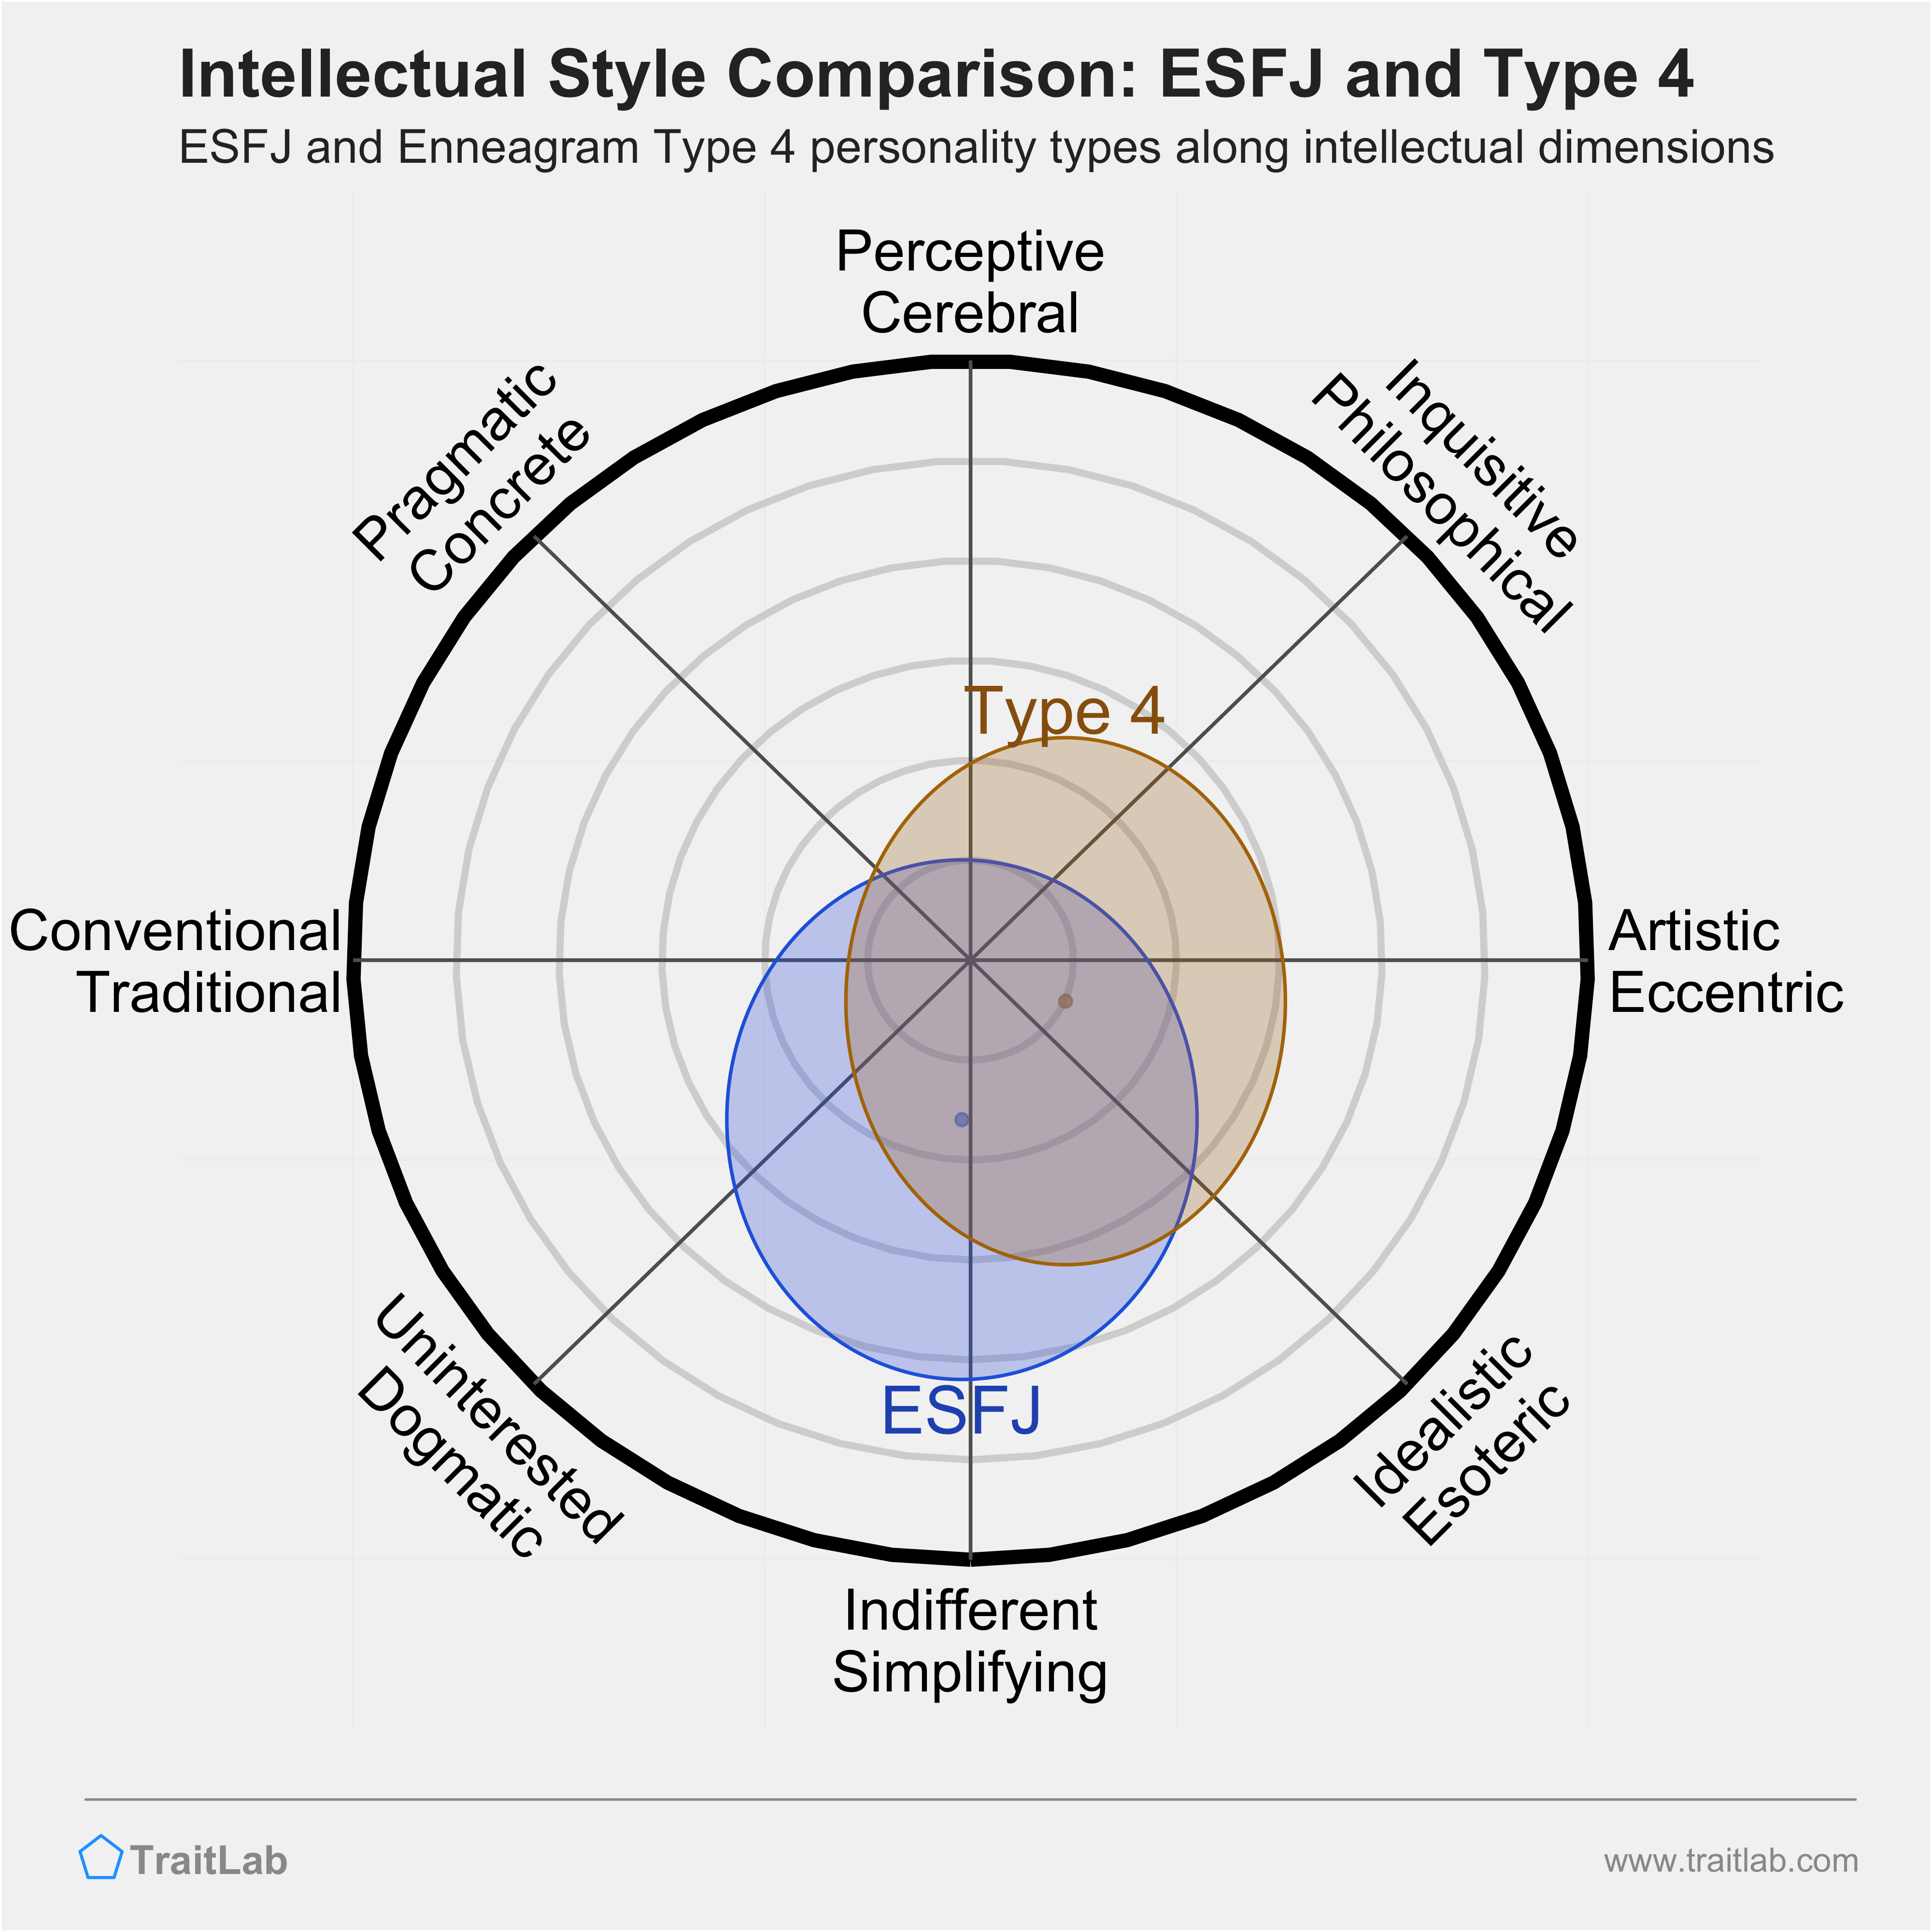 ESFJ and Type 4 comparison across intellectual dimensions